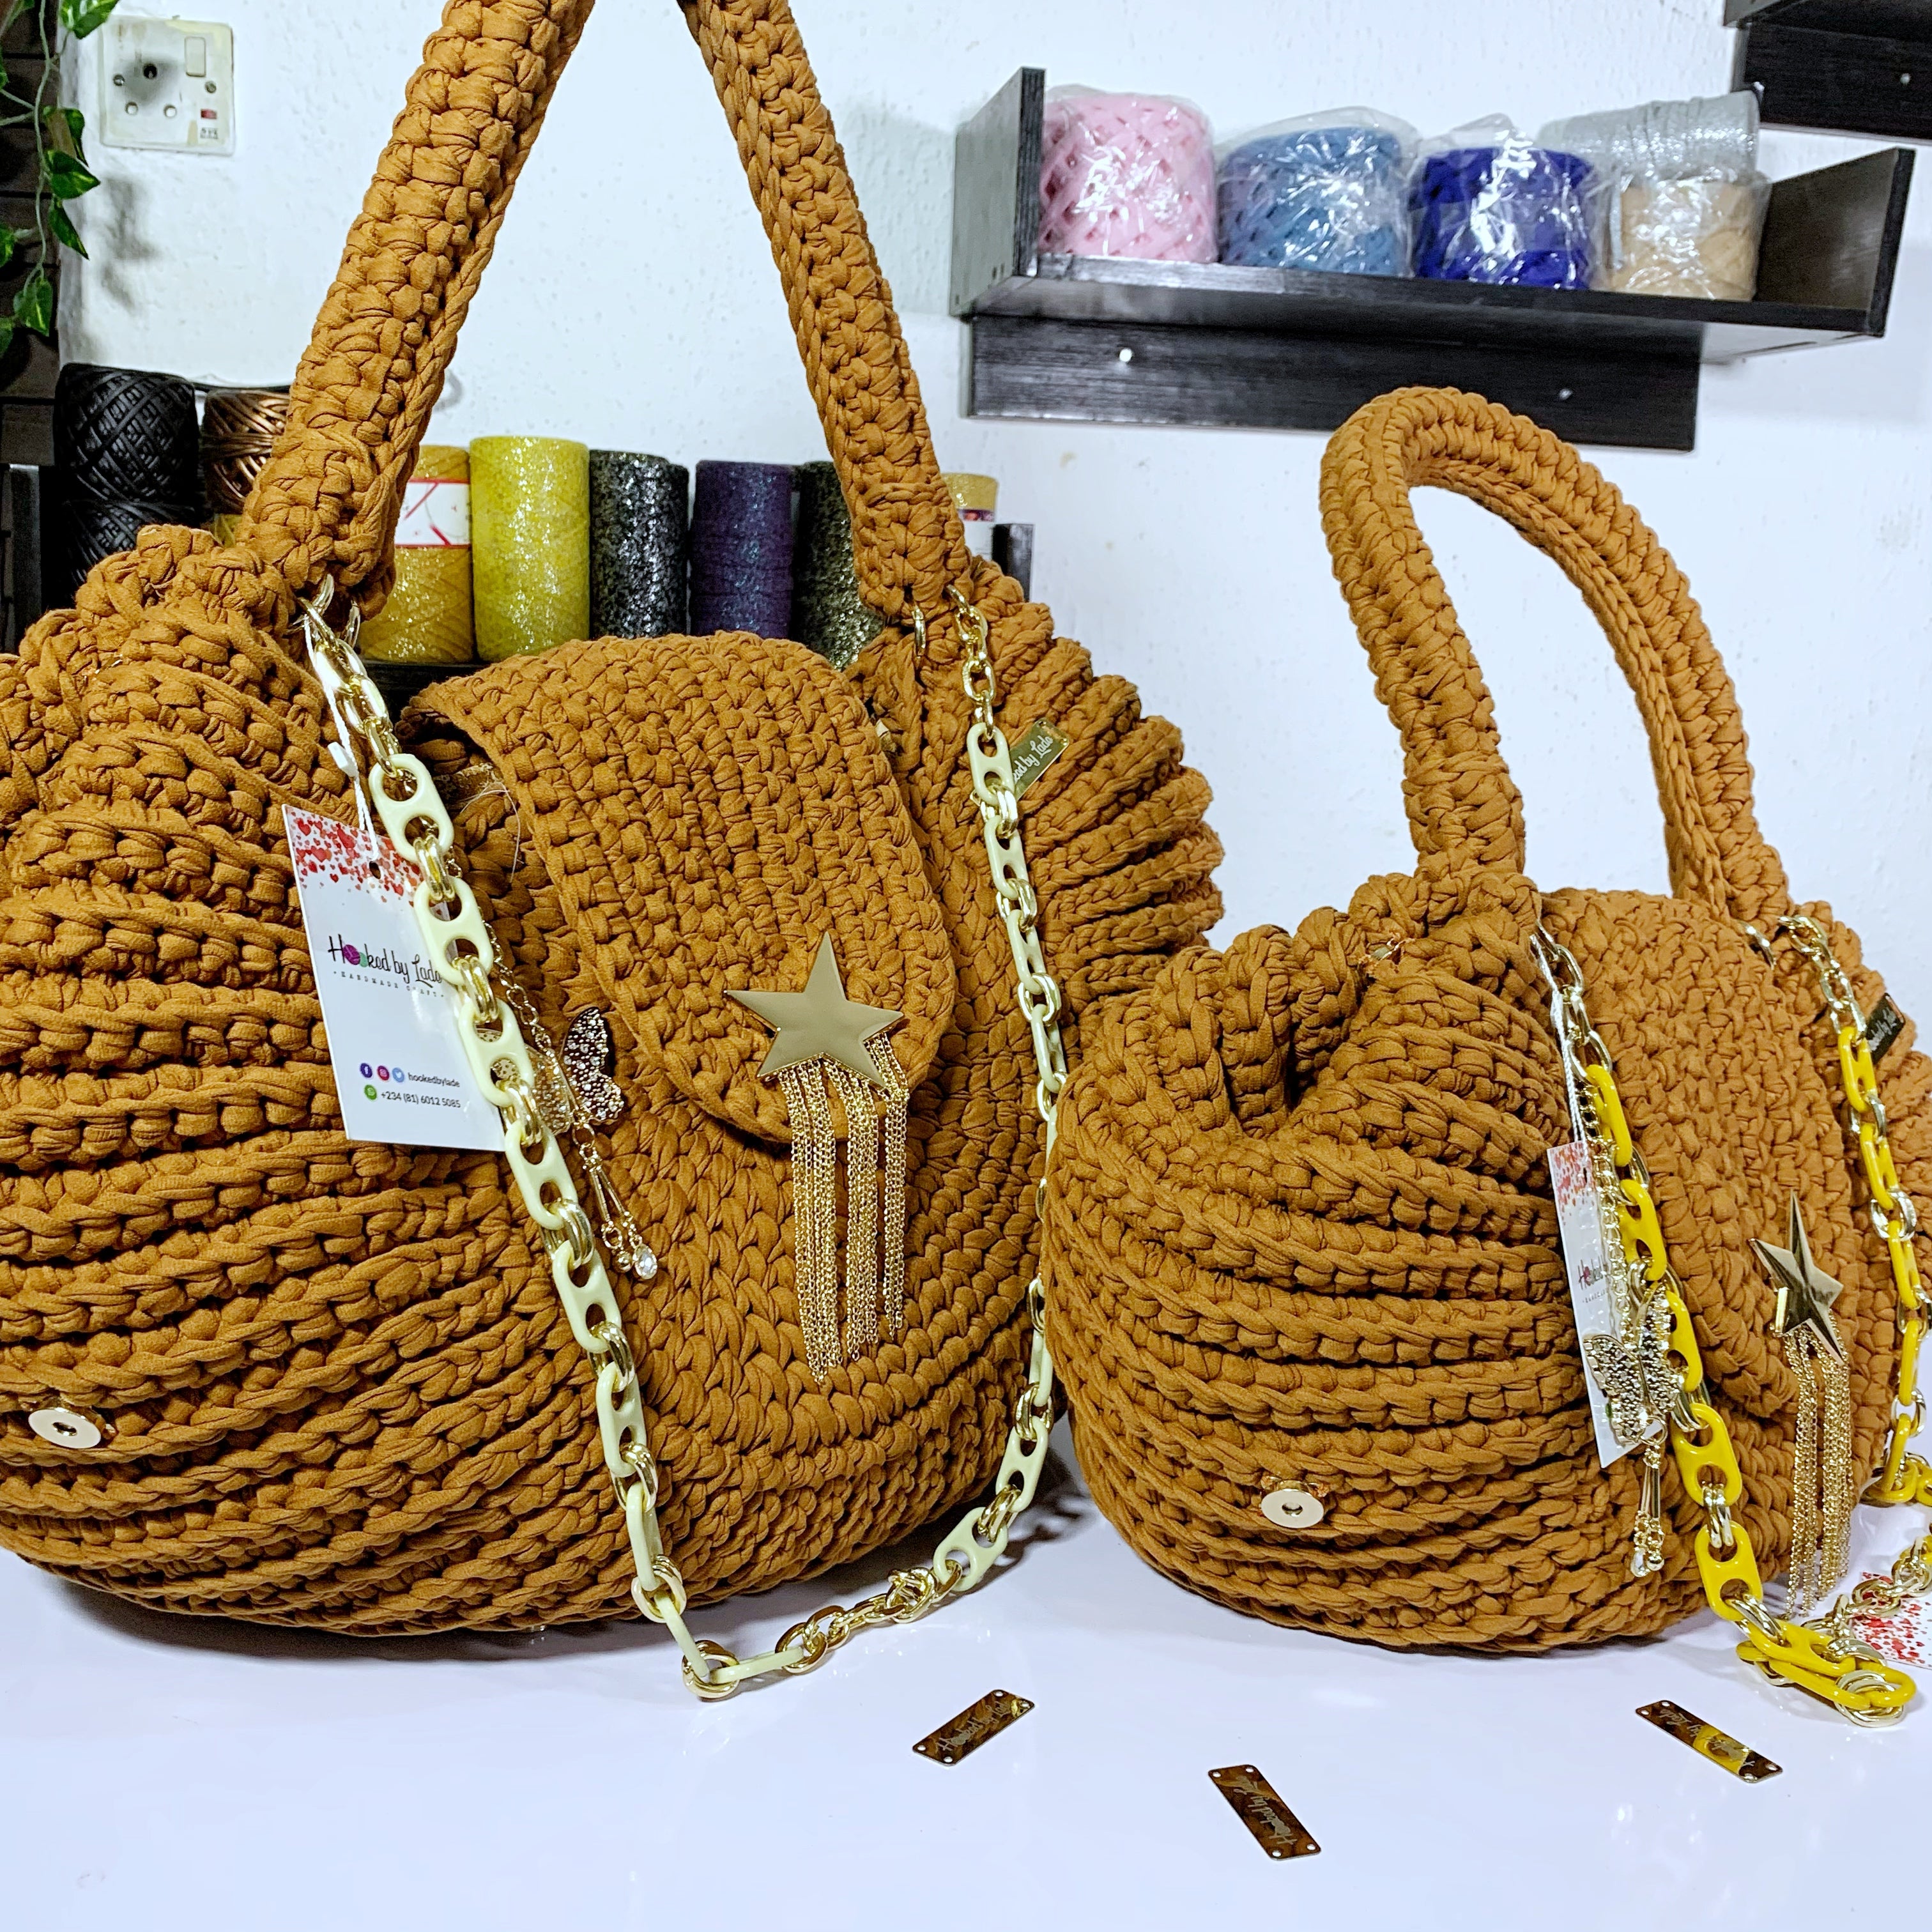 Large Crochet Bag | Handmade Crochet Bag | Hooked by Lade